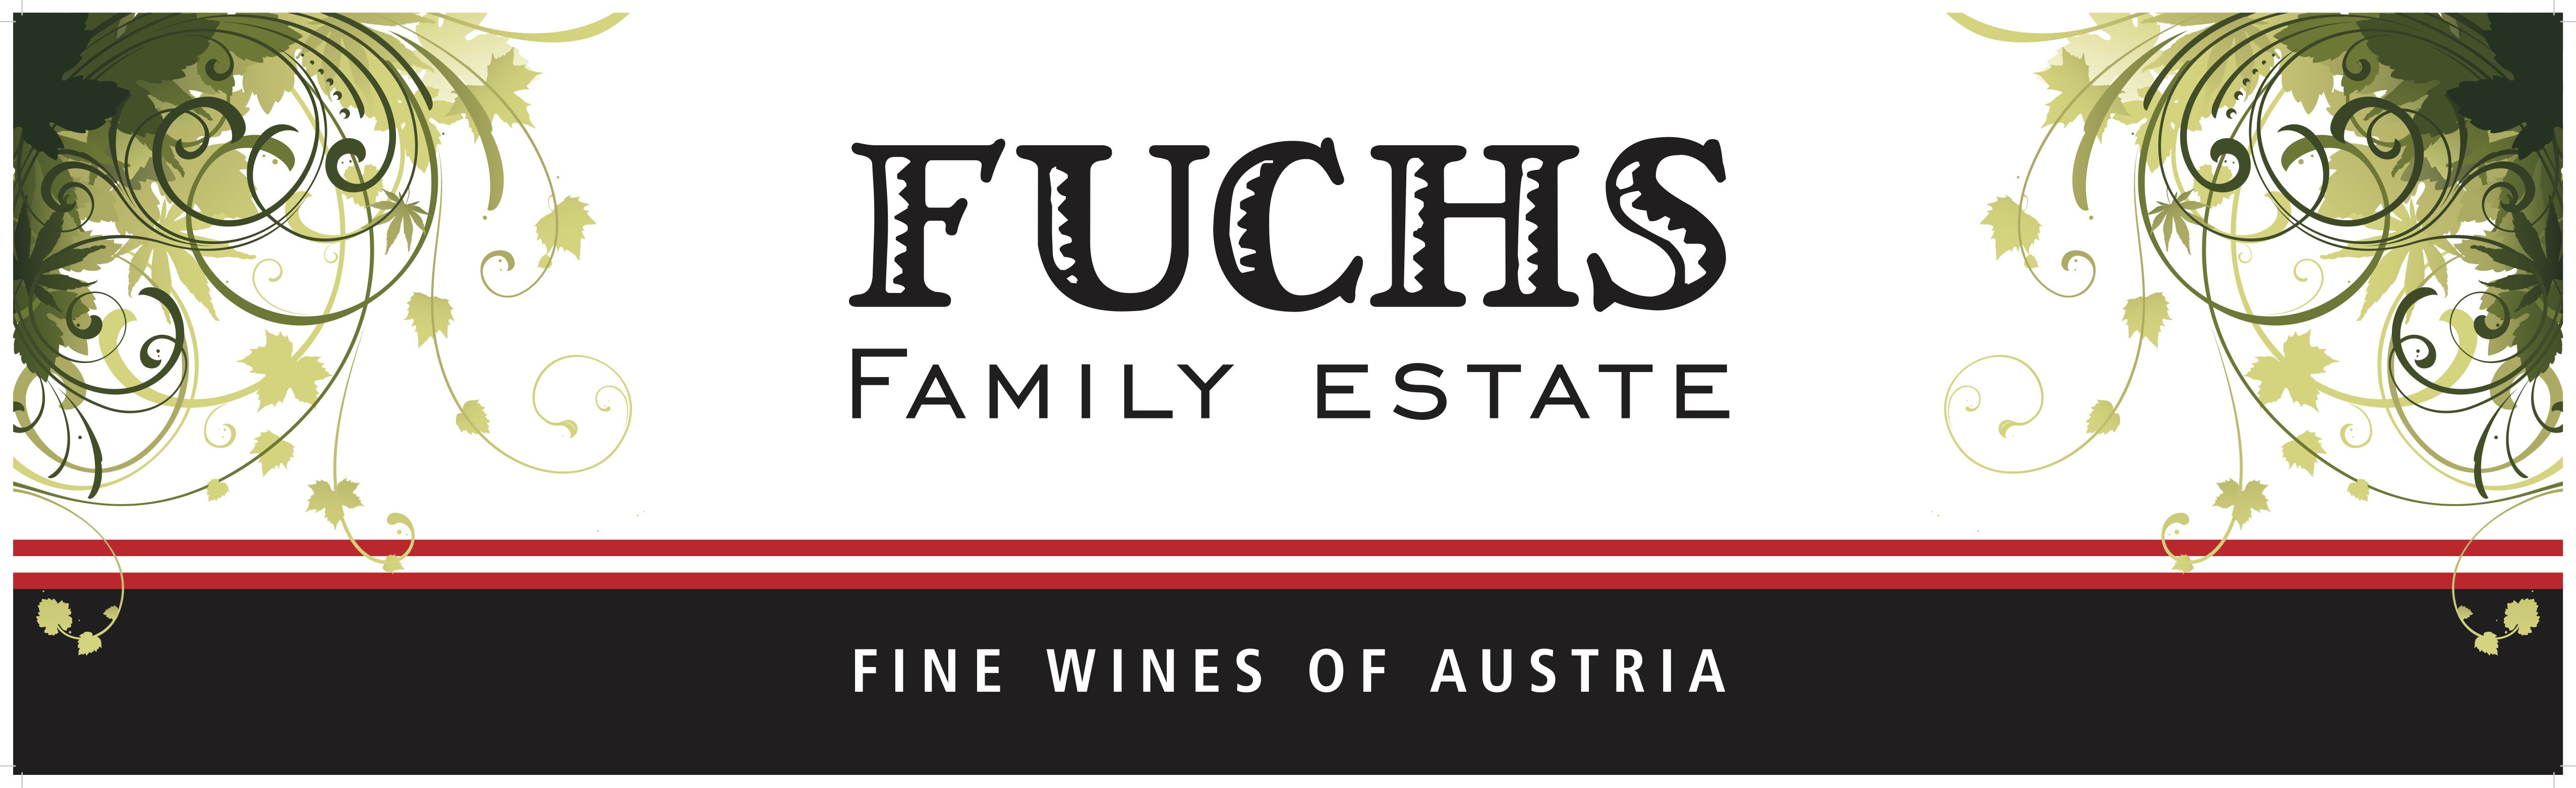 Weingut Fuchs